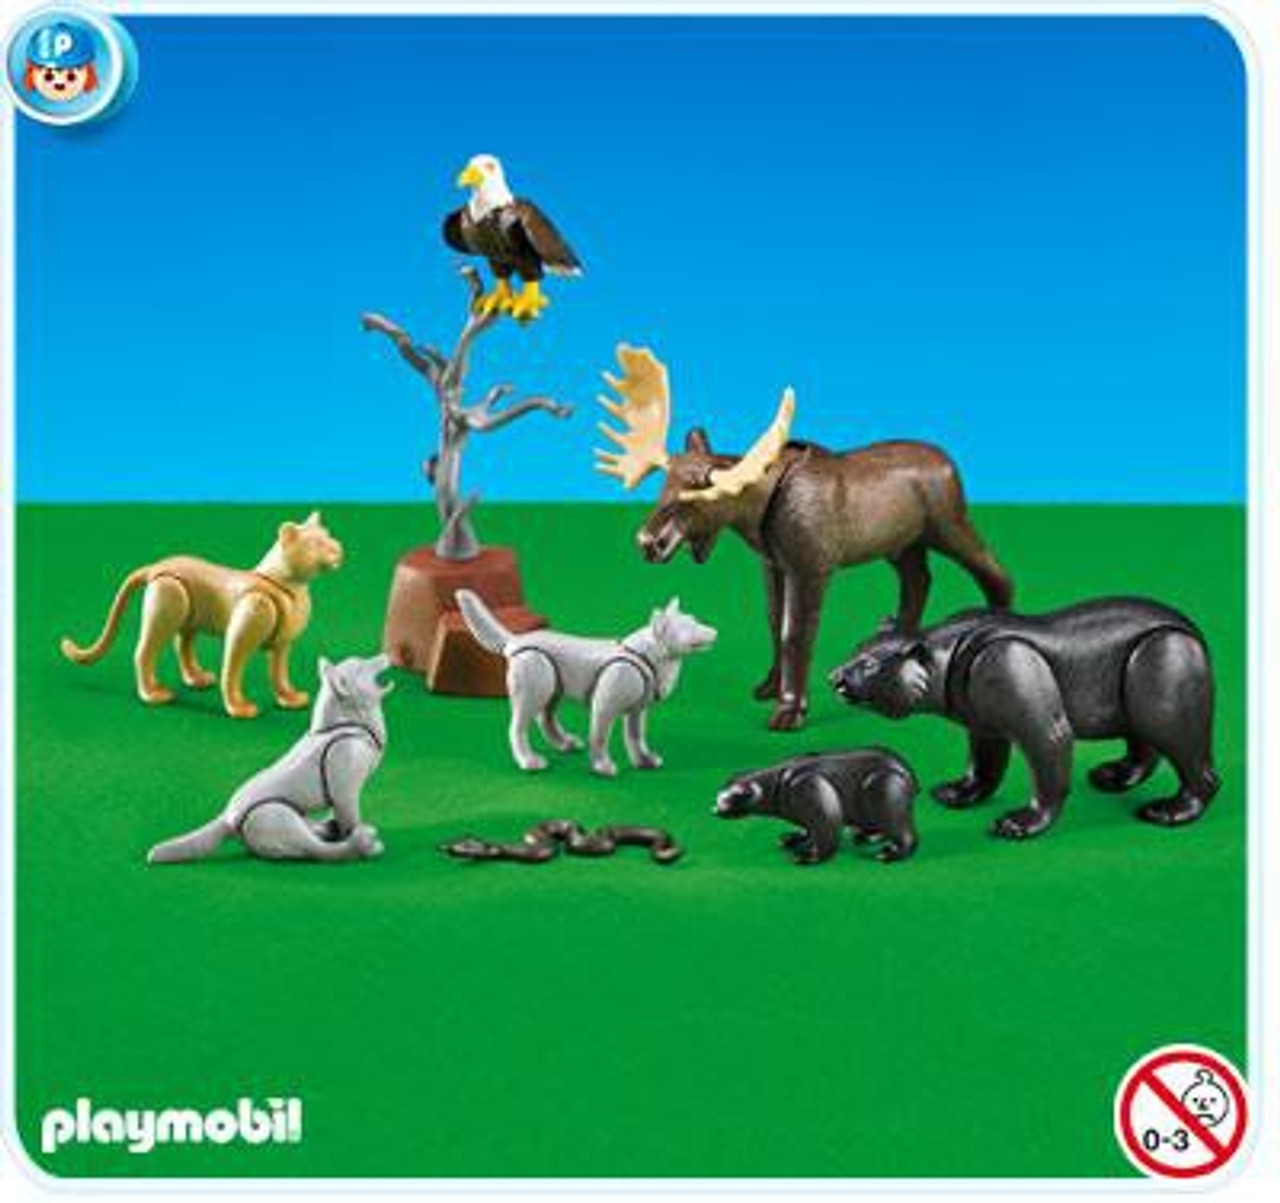 playmobil animal toys